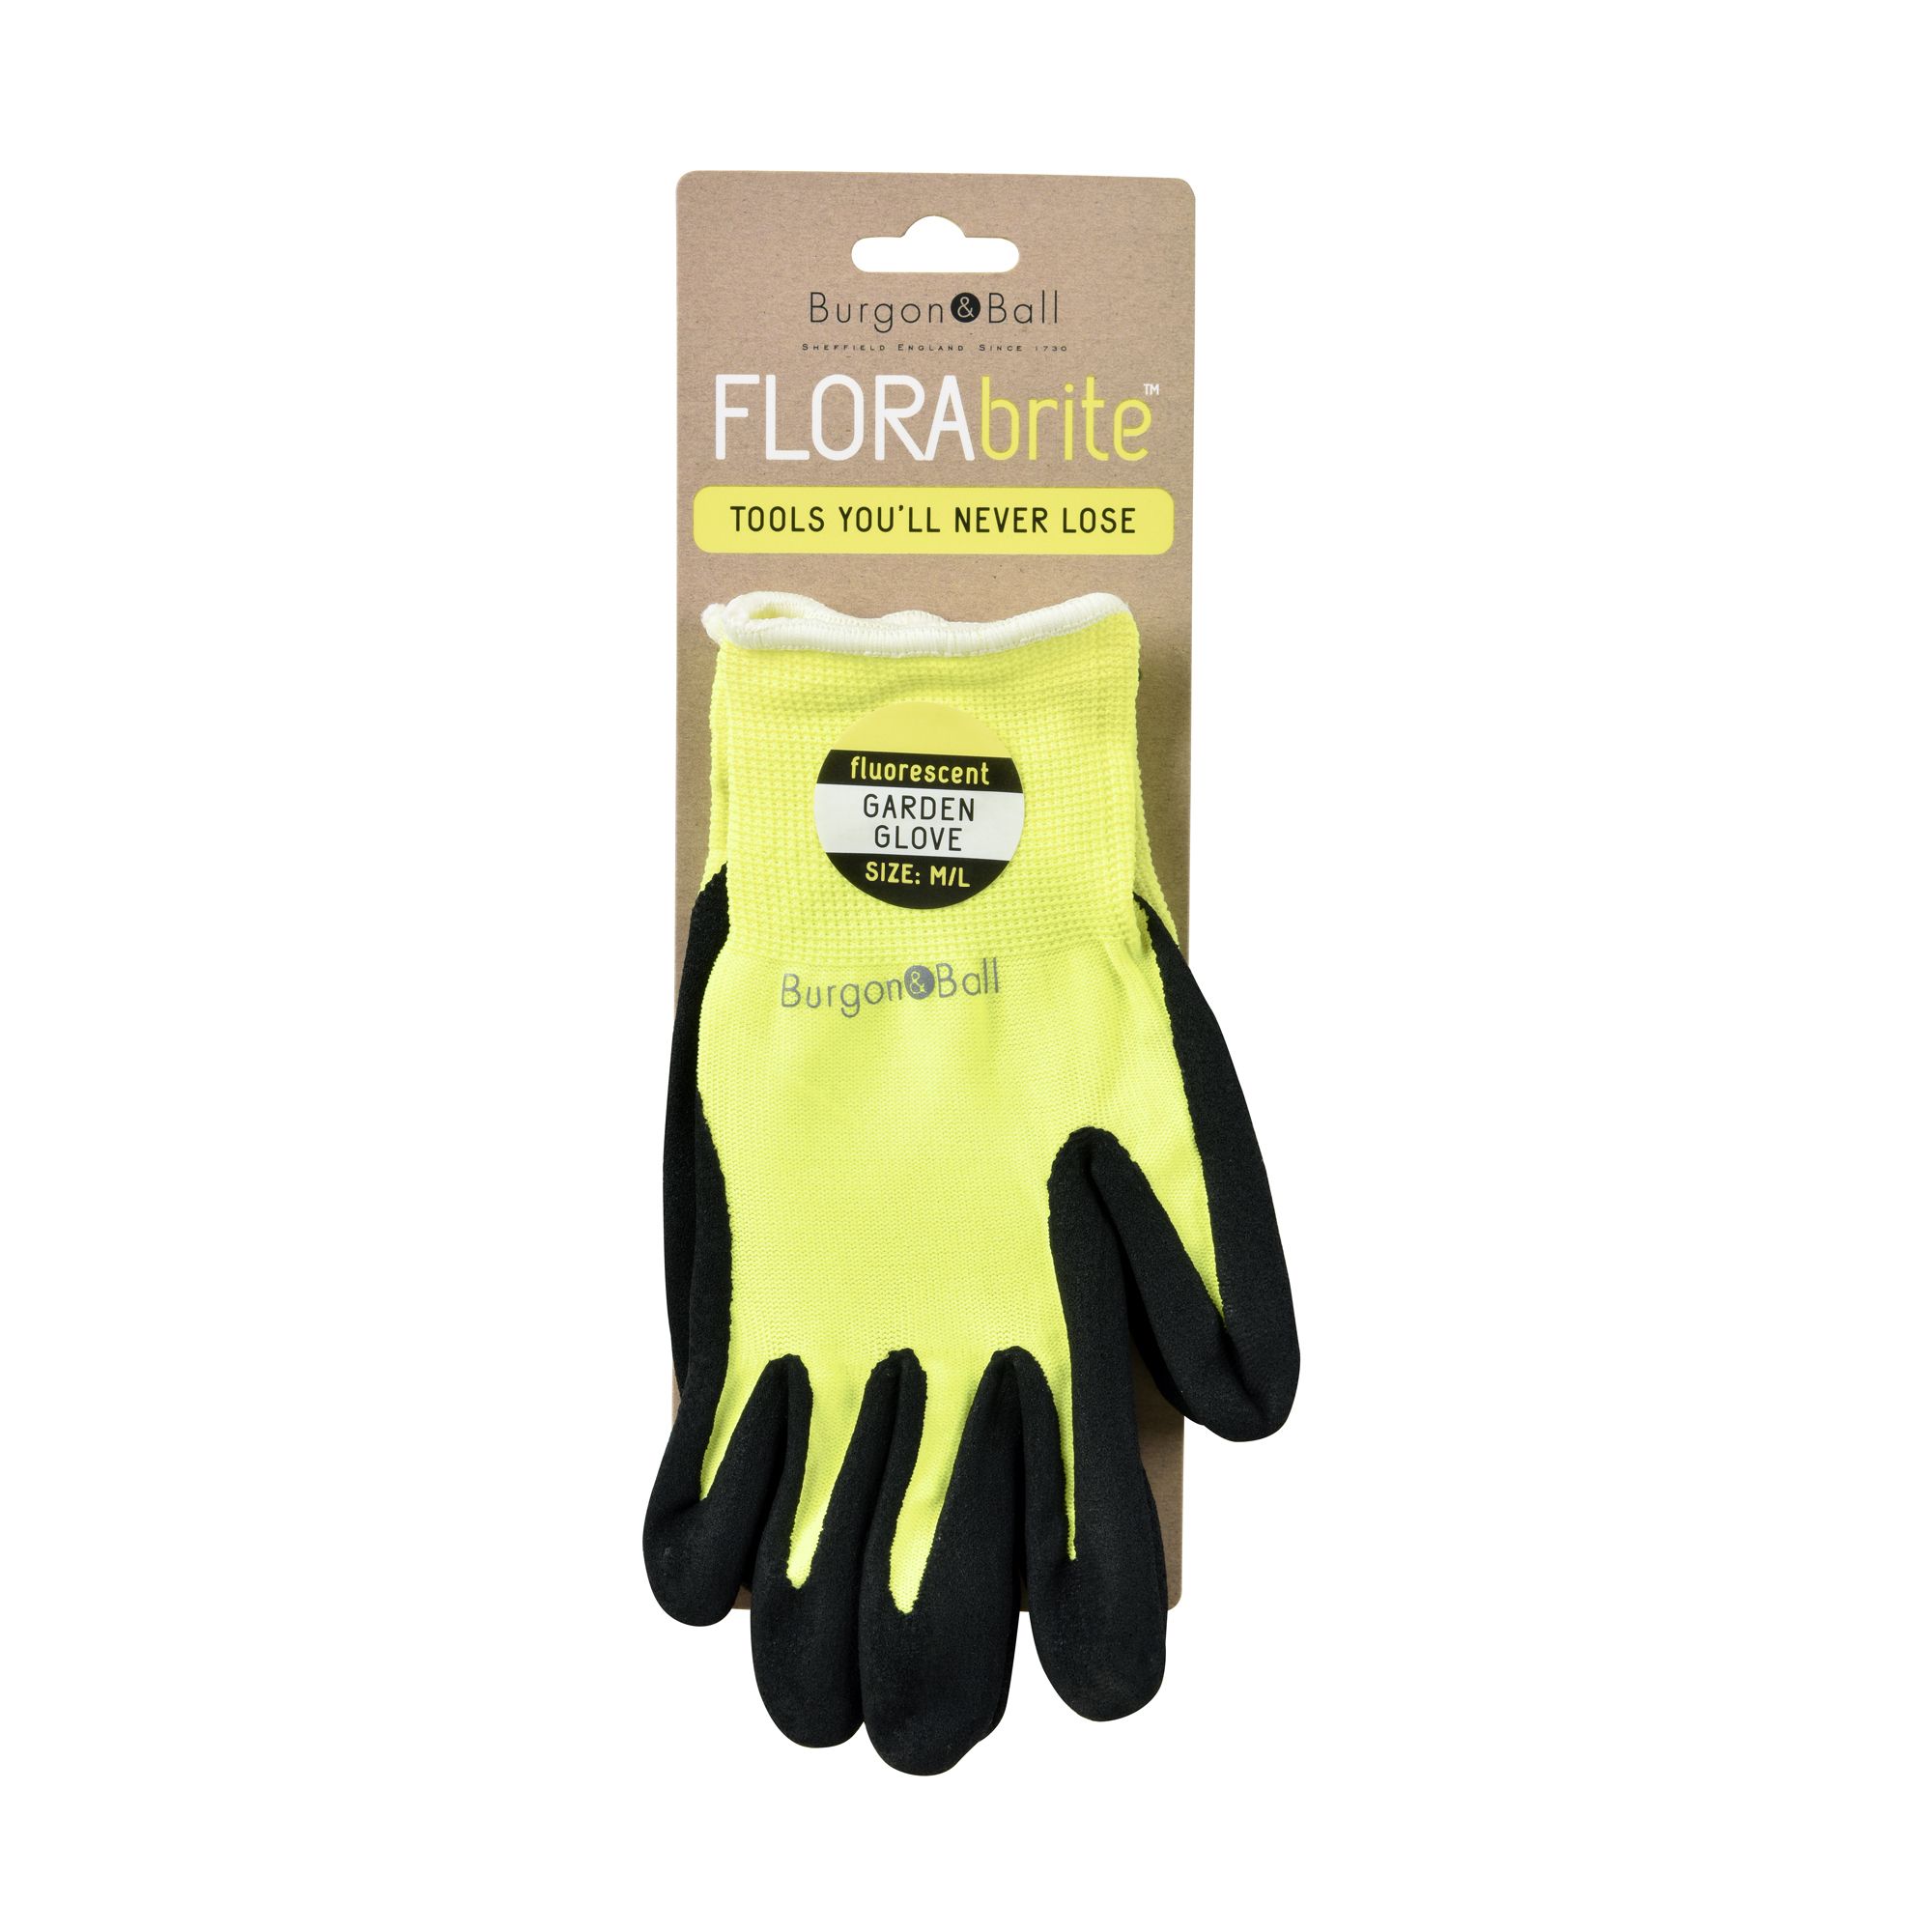 Burgon & Ball Flora brite Nylon Yellow Gardening gloves Medium, Pair of 2